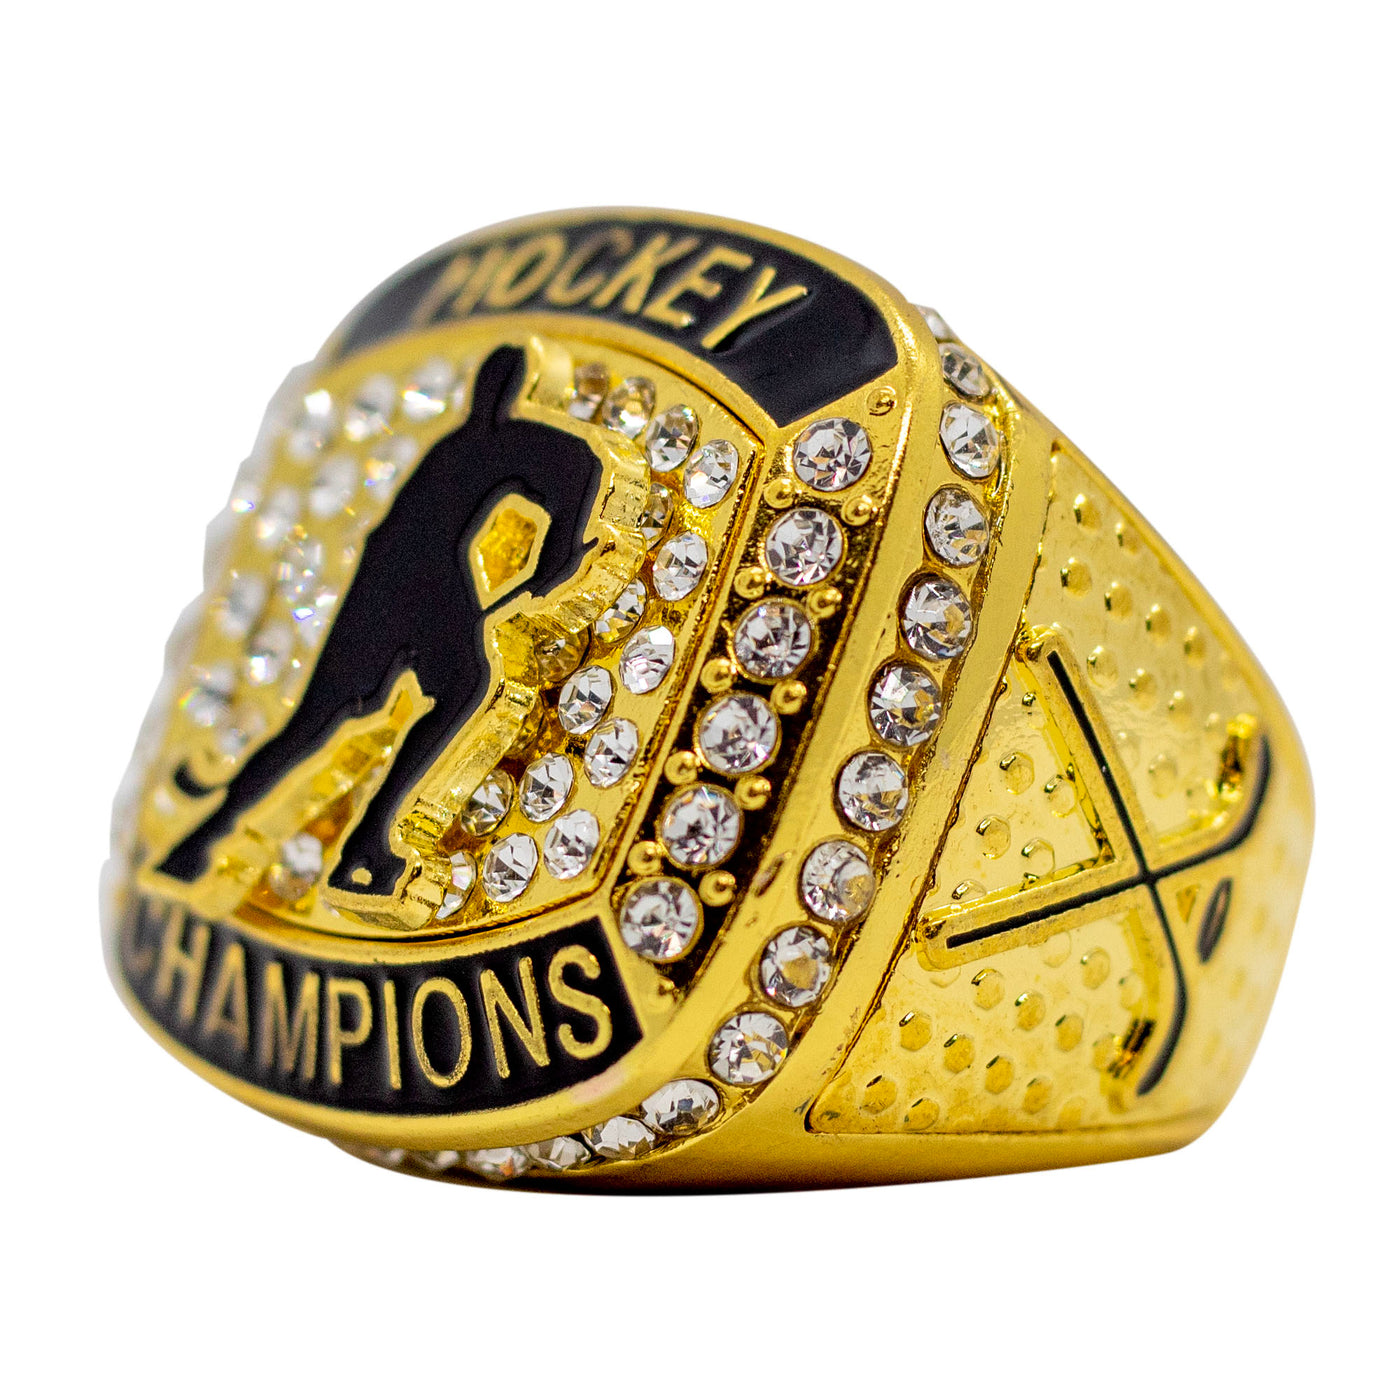 hockey gold champions ring